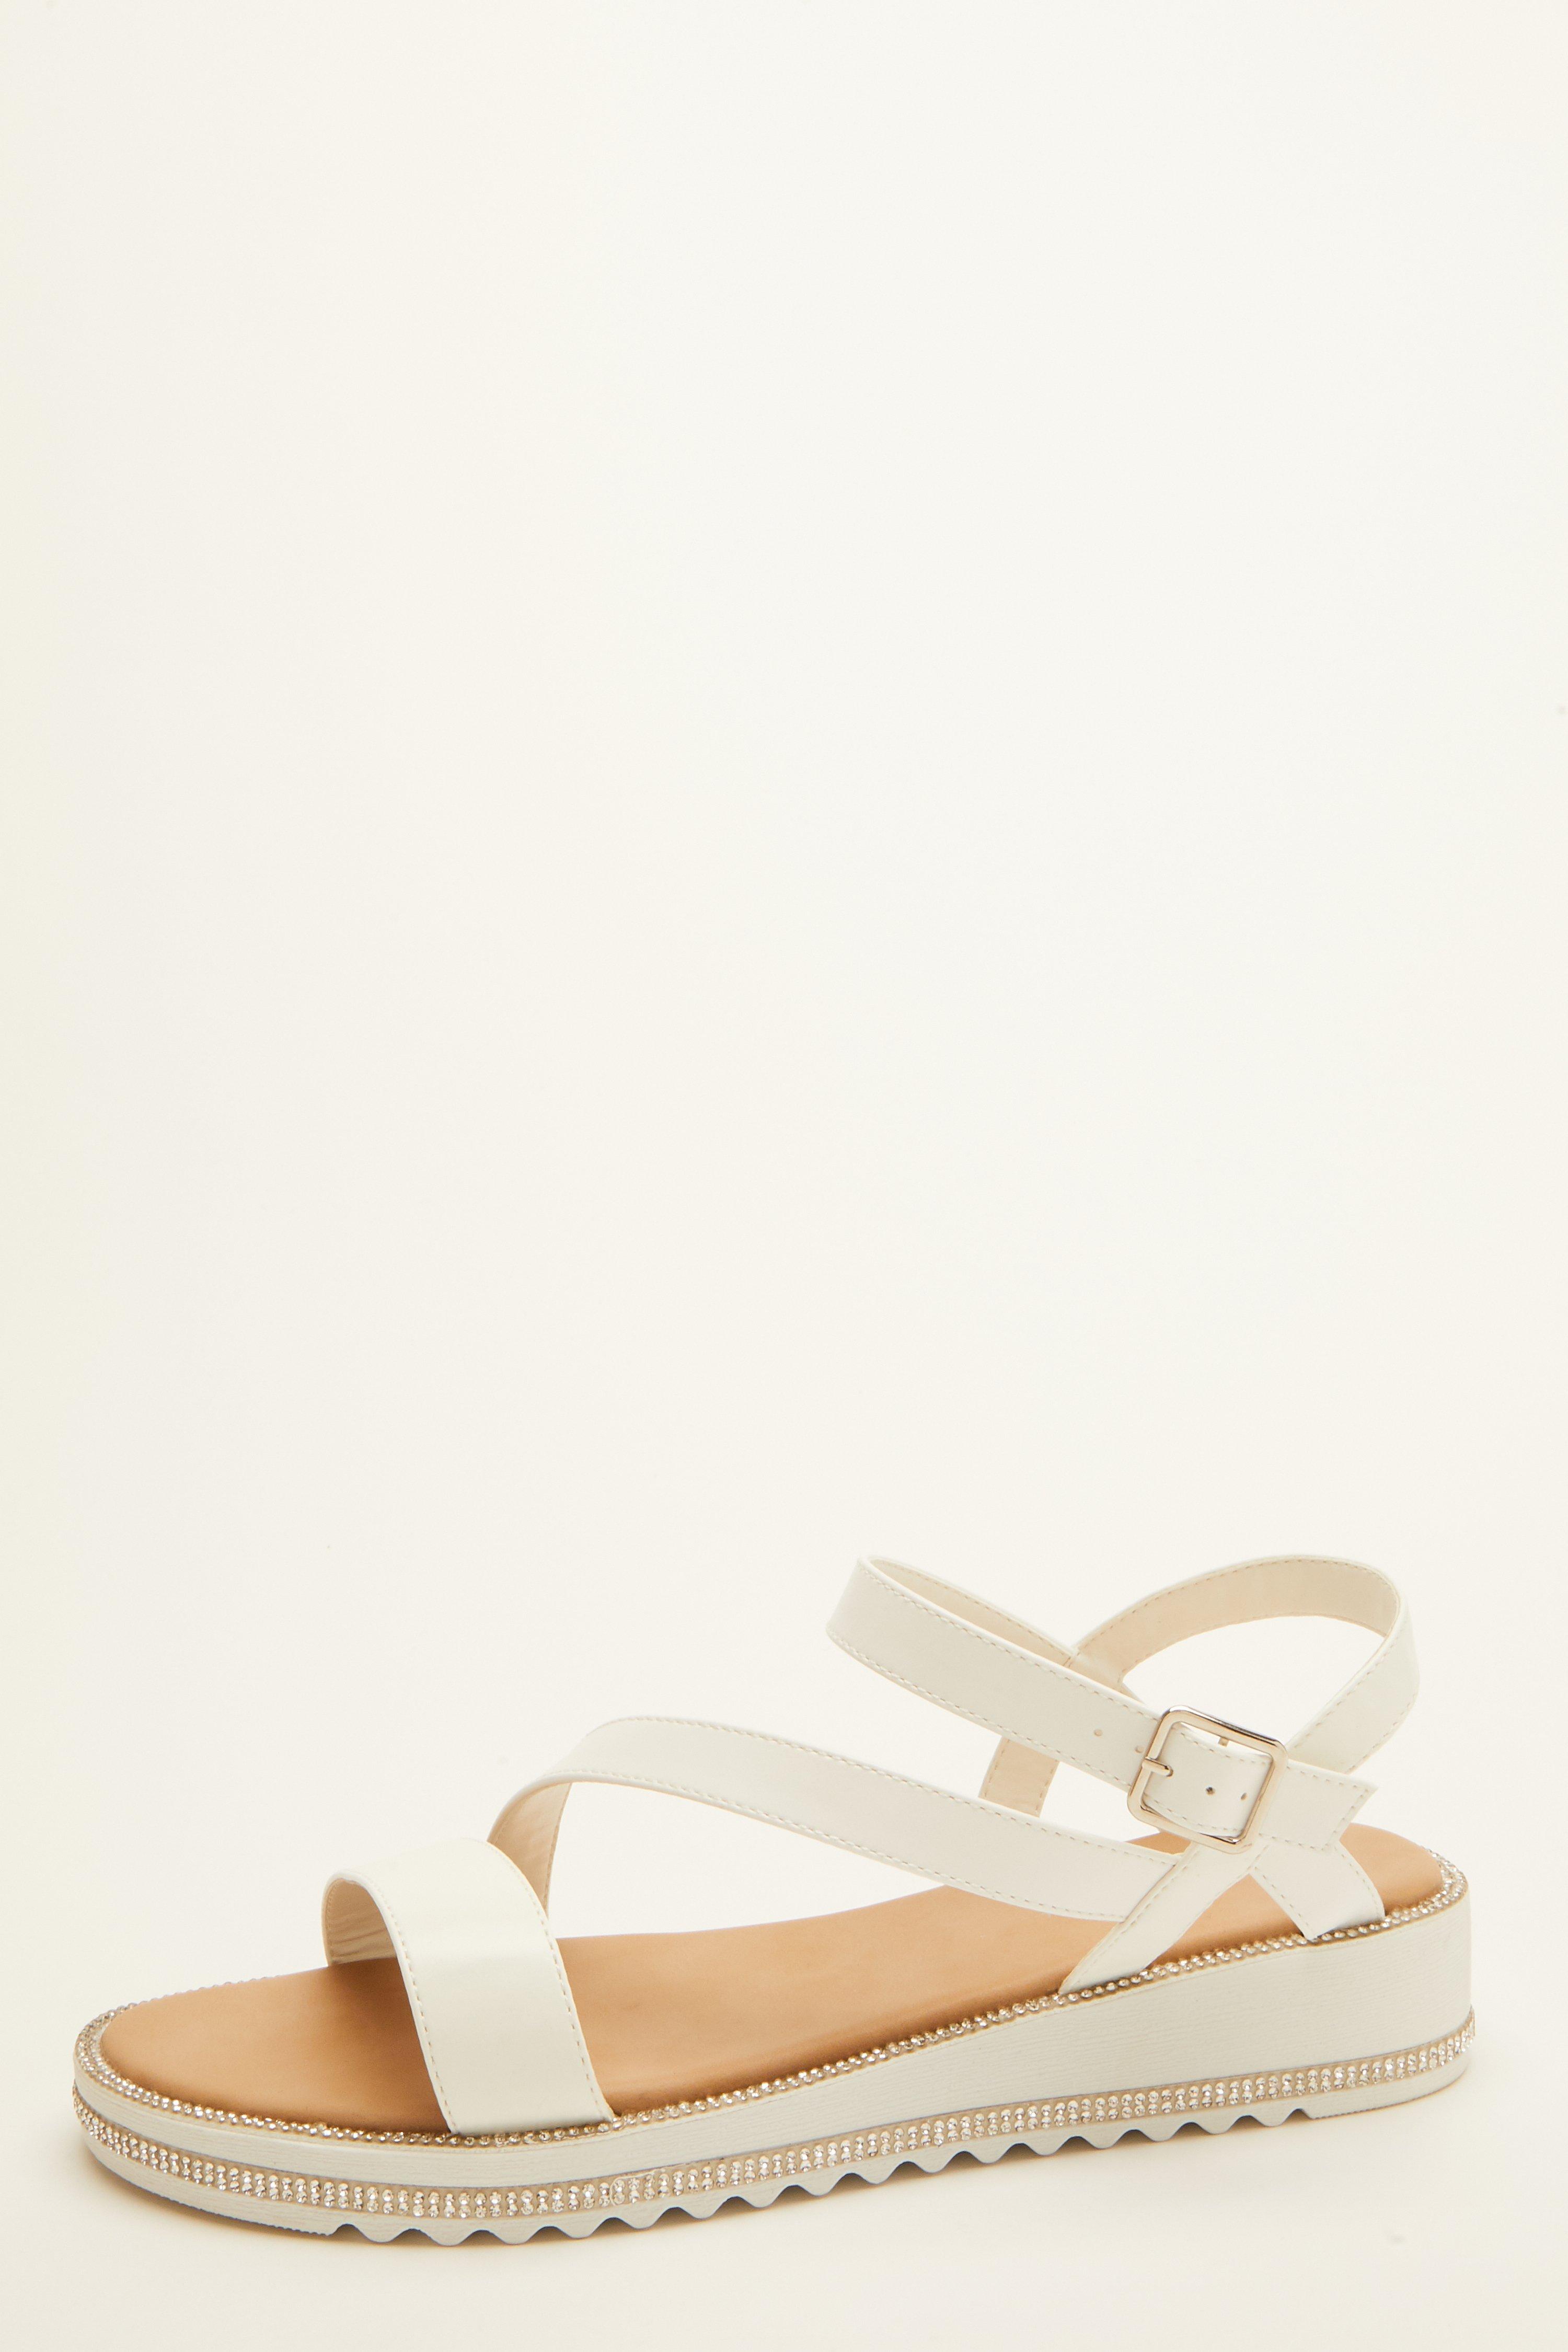 White Faux Leather Flatform Sandals - Quiz Clothing